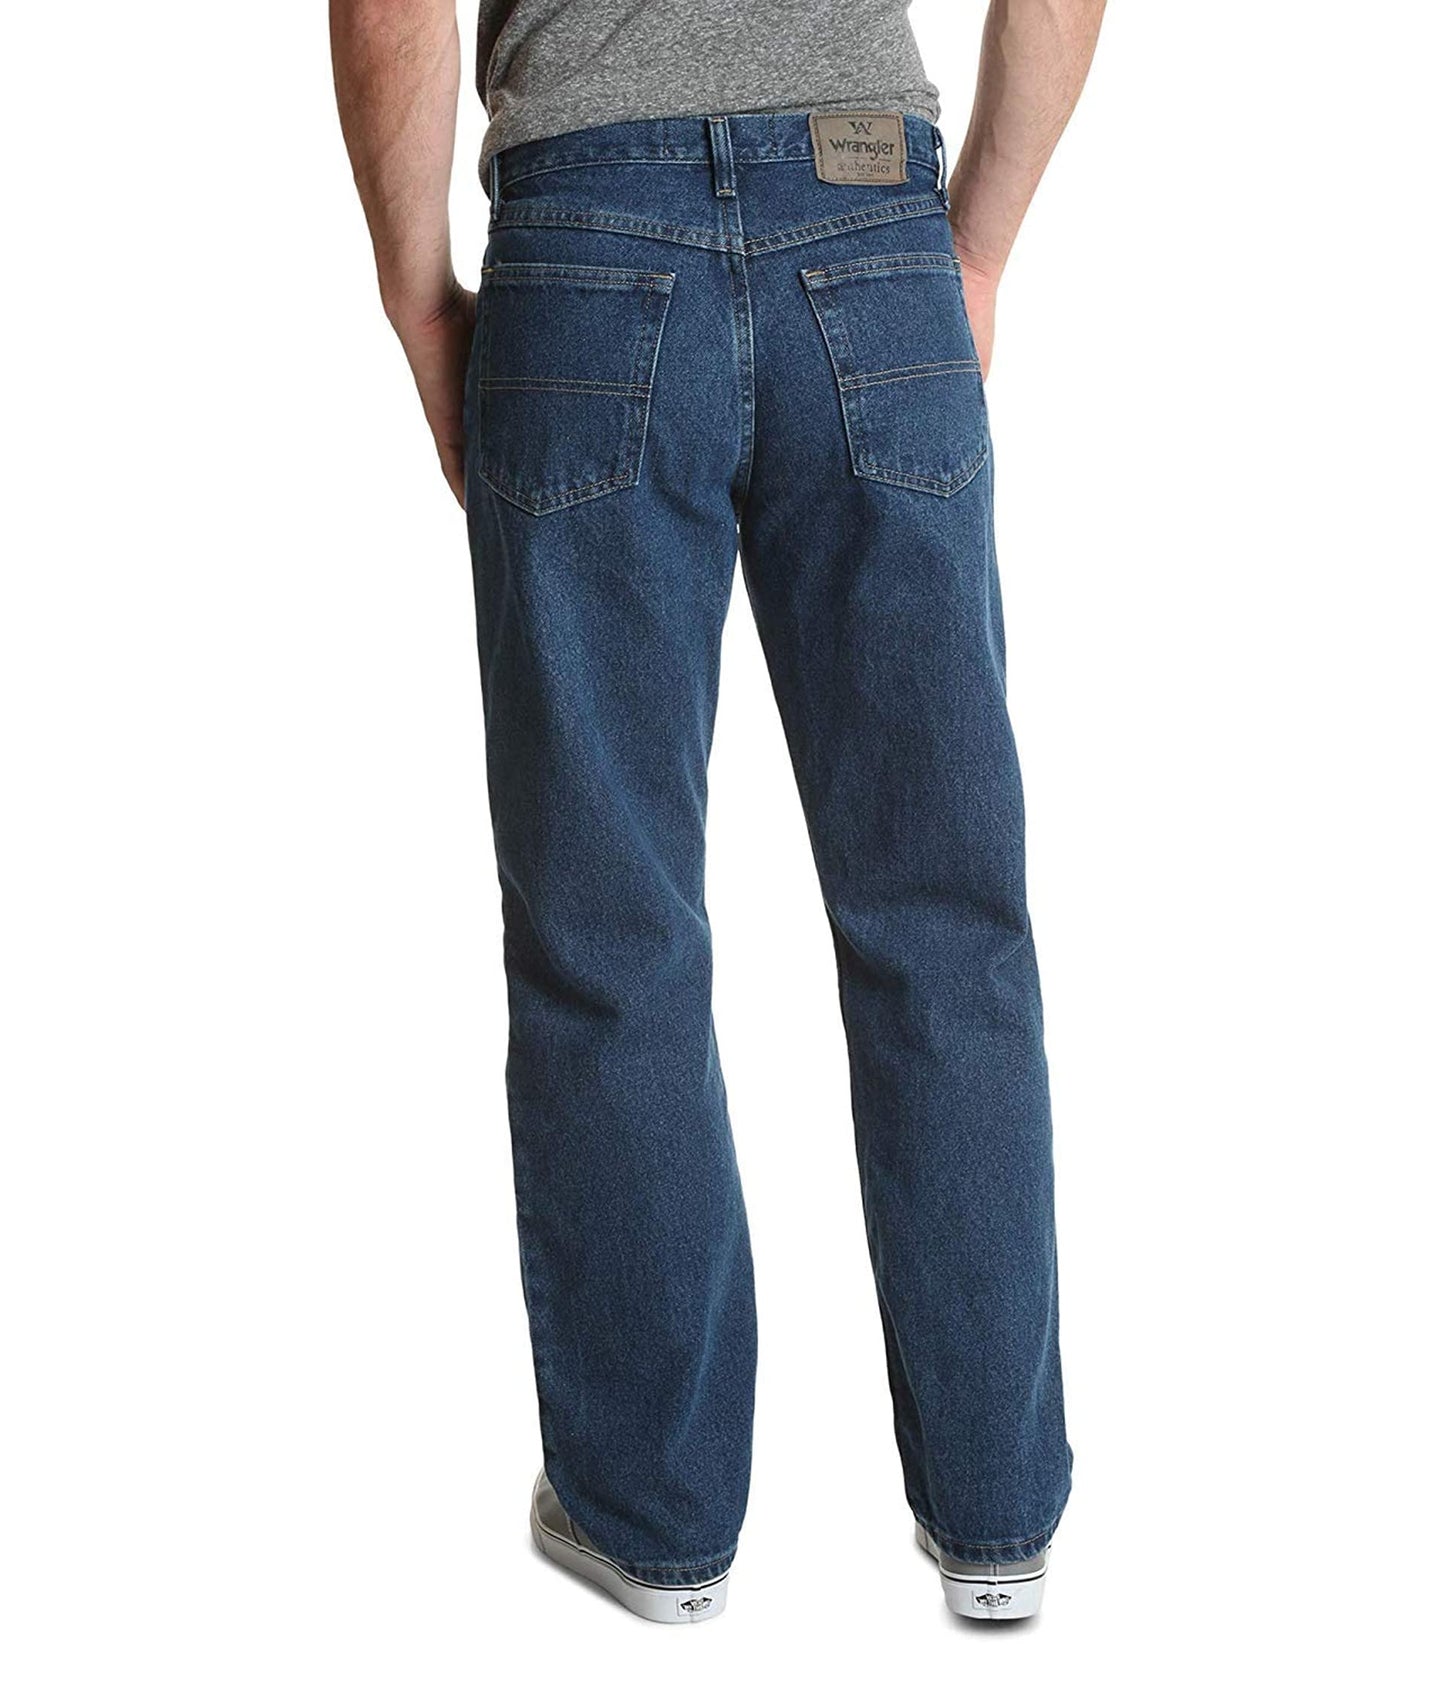 Wrangler Authentics Men's Classic 5-Pocket Relaxed Fit Cotton Jean, Dark Stonewash, 42W x 30L